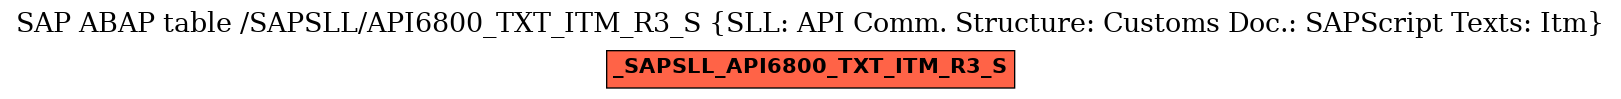 E-R Diagram for table /SAPSLL/API6800_TXT_ITM_R3_S (SLL: API Comm. Structure: Customs Doc.: SAPScript Texts: Itm)